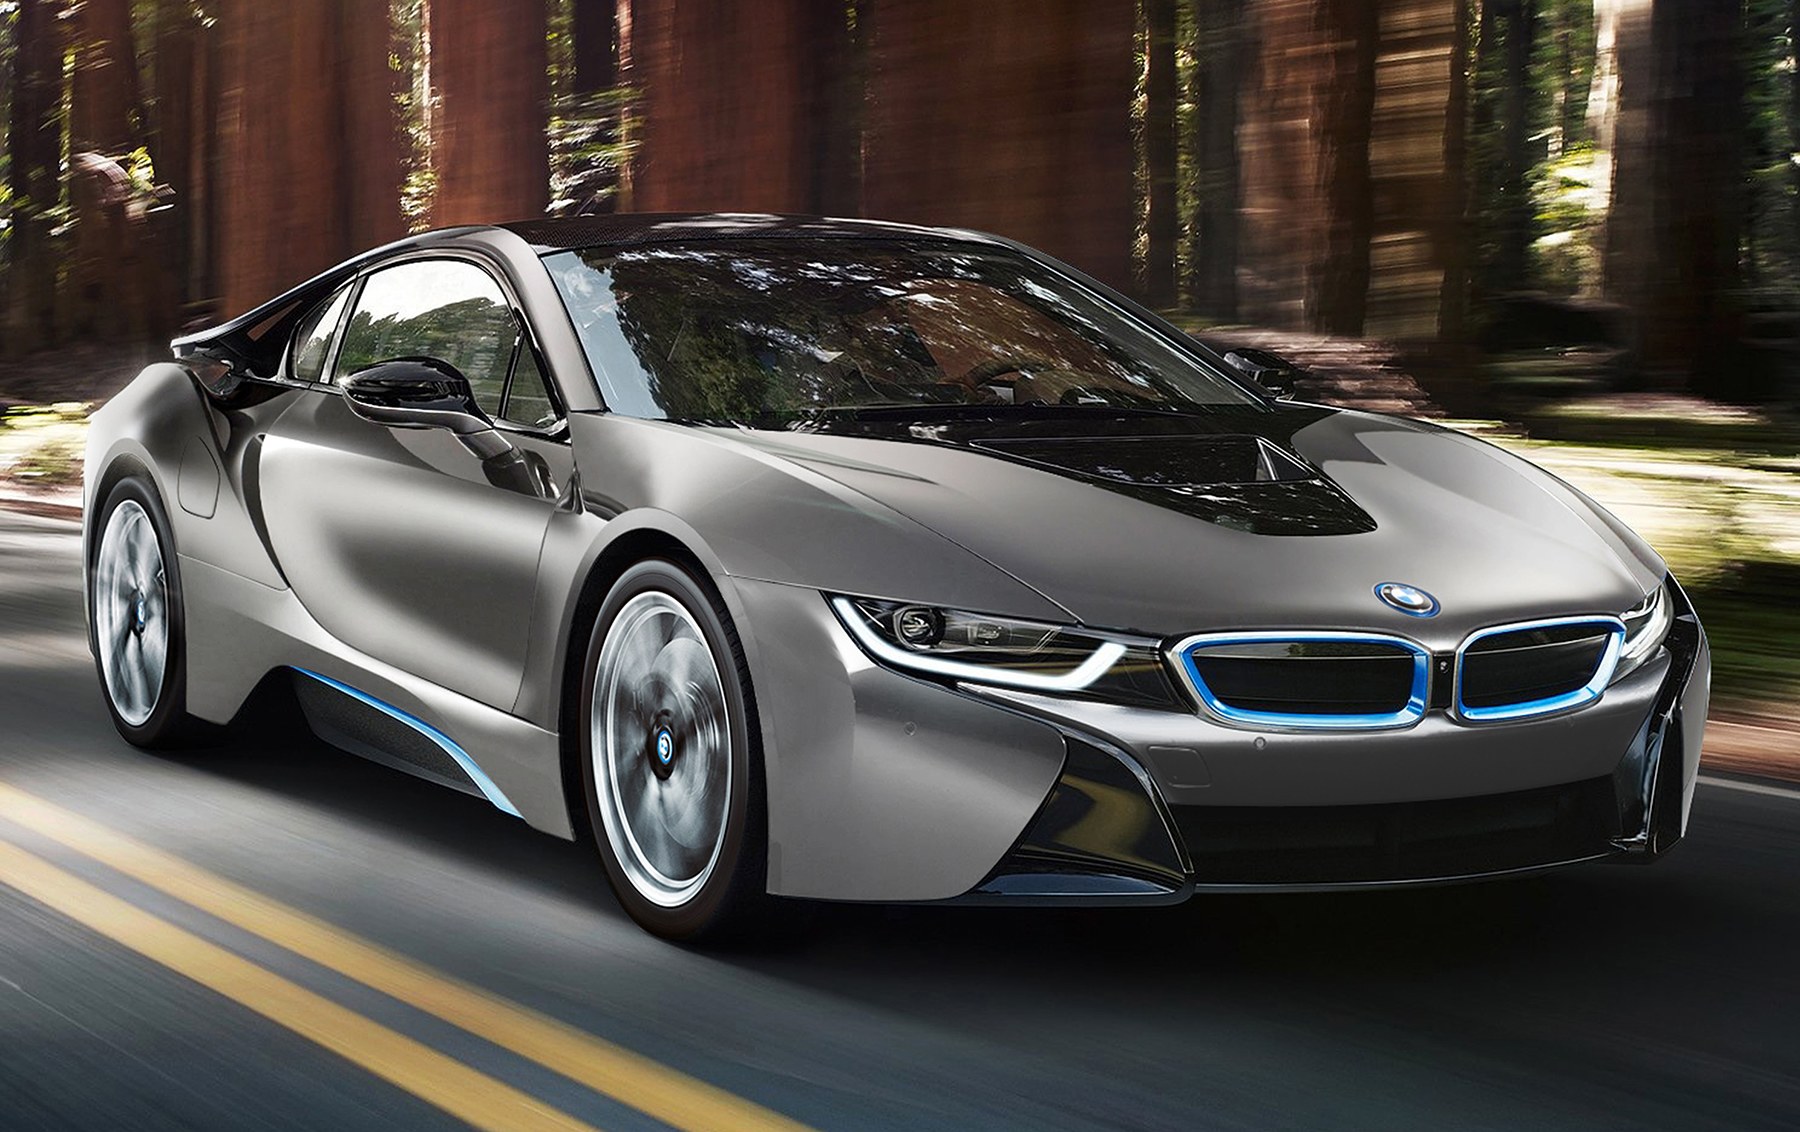 2014 BMW i8 Concours d'Elegance Edition